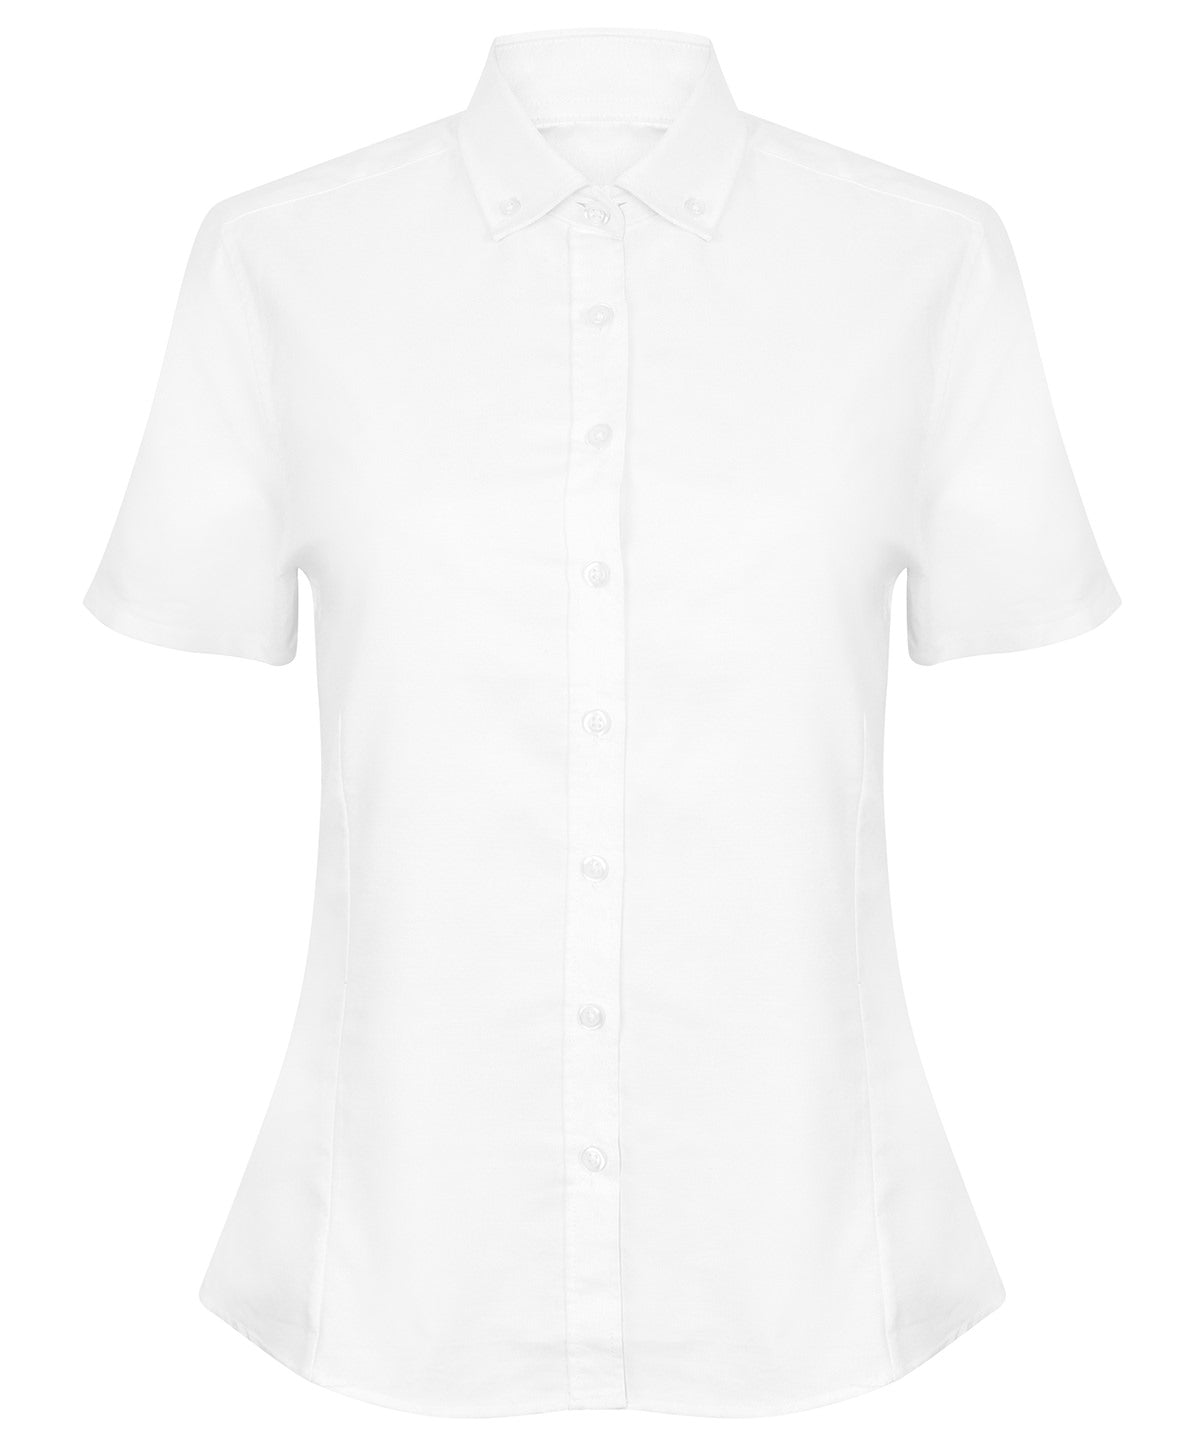 Personalised Shirts - Light Blue Henbury Women's modern short sleeve Oxford shirt